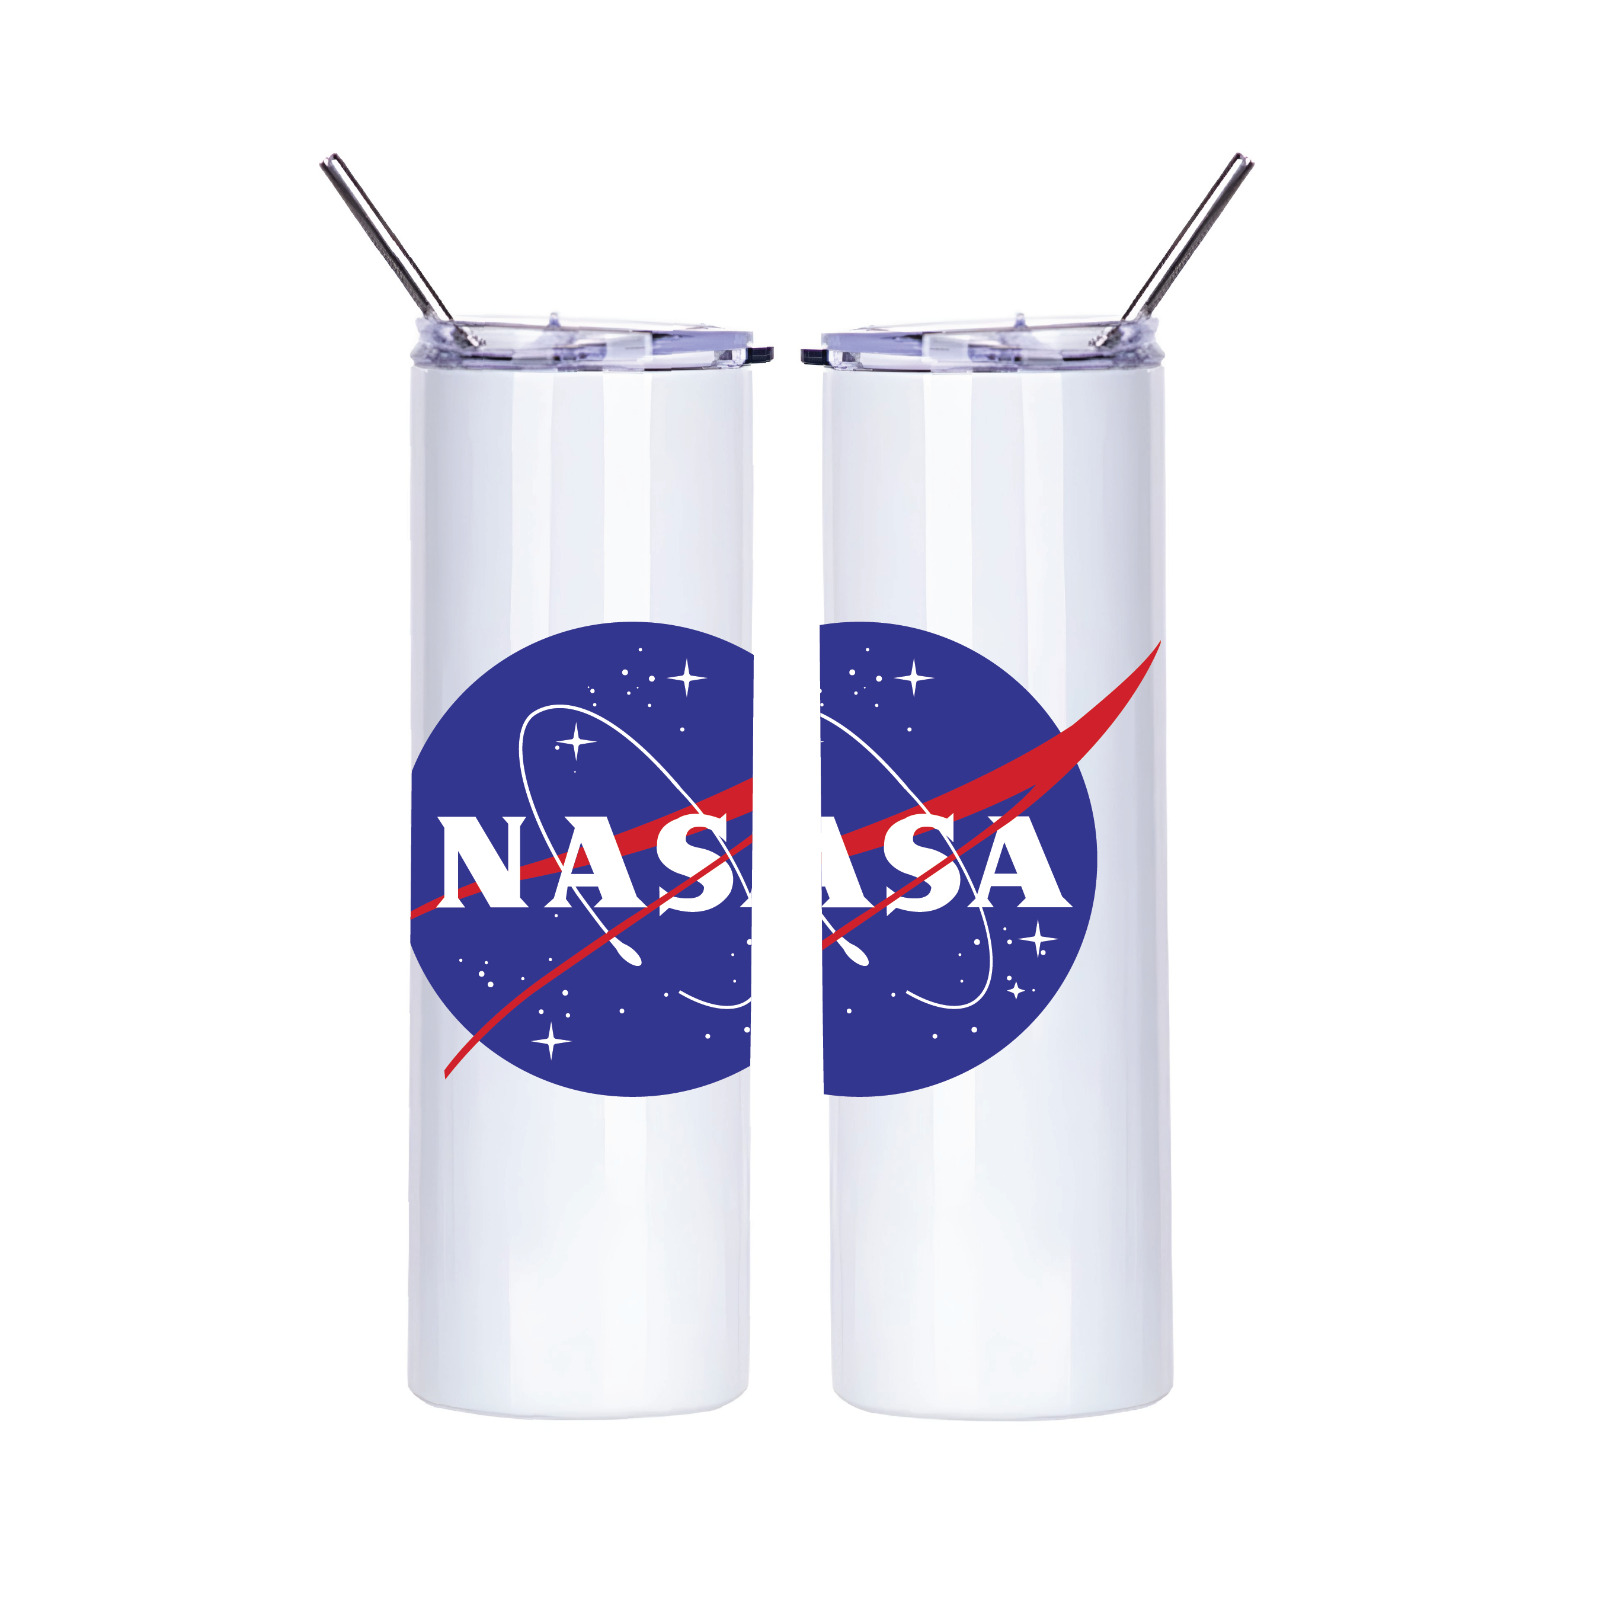 NASA Logo Science Space Engineering Insulated 20oz Skinny Travel Tumbler Mug Cup